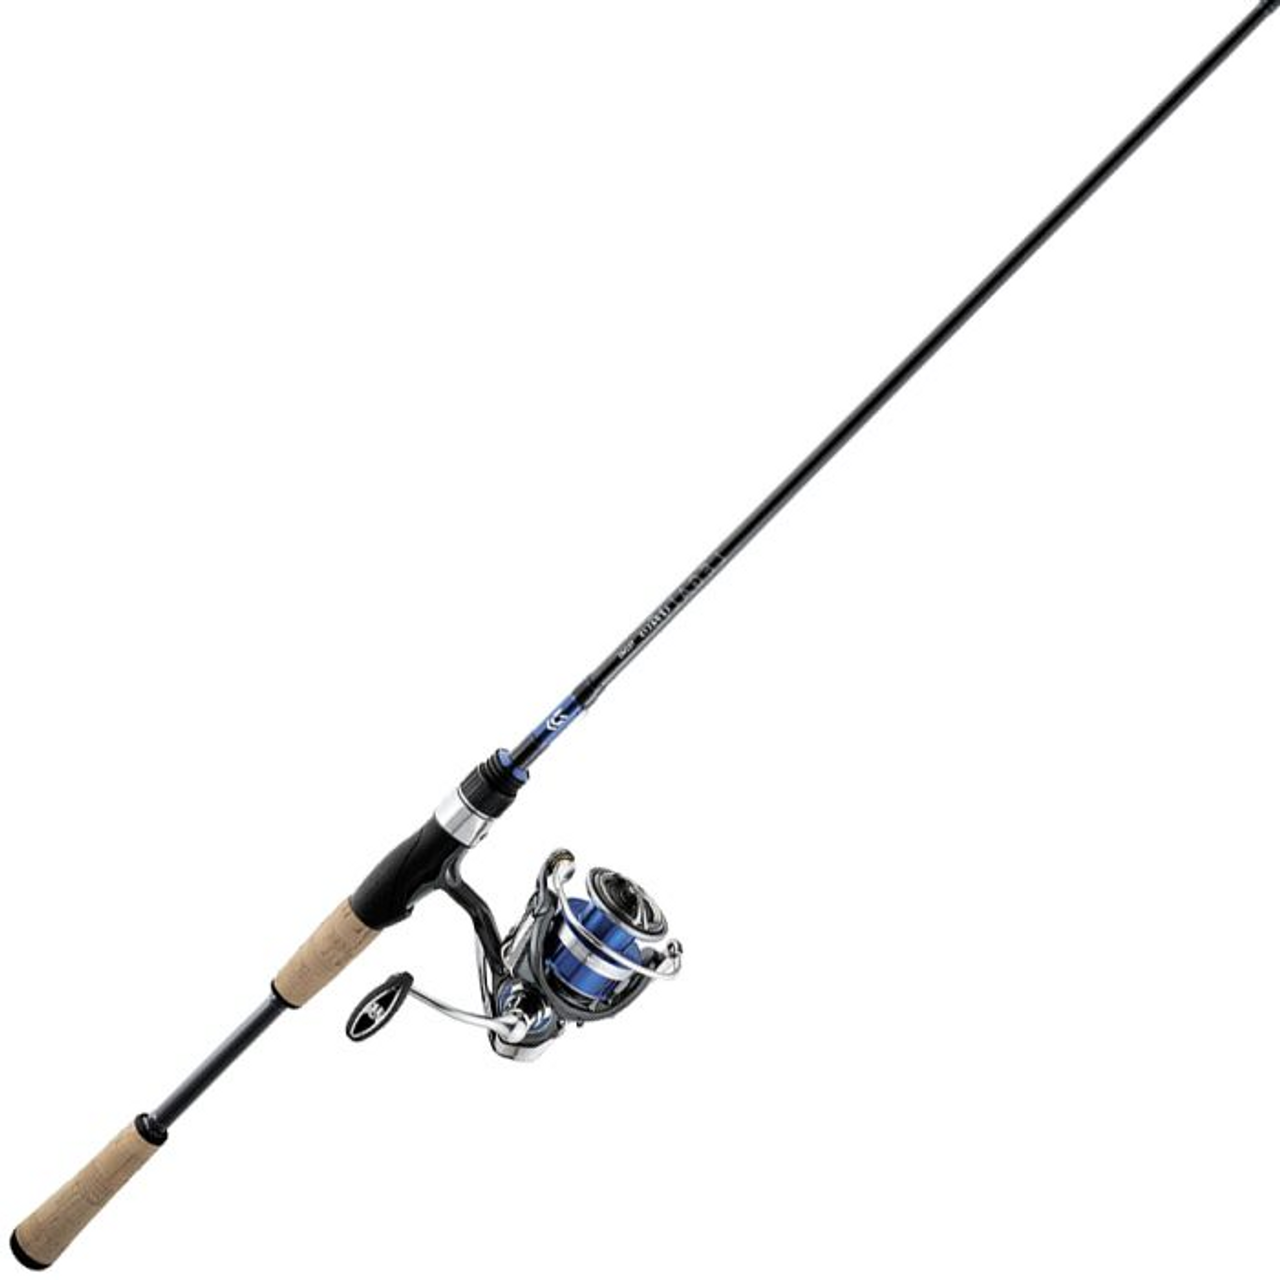 Daiwa Catfish Fishing Rod & Reel Combos for sale